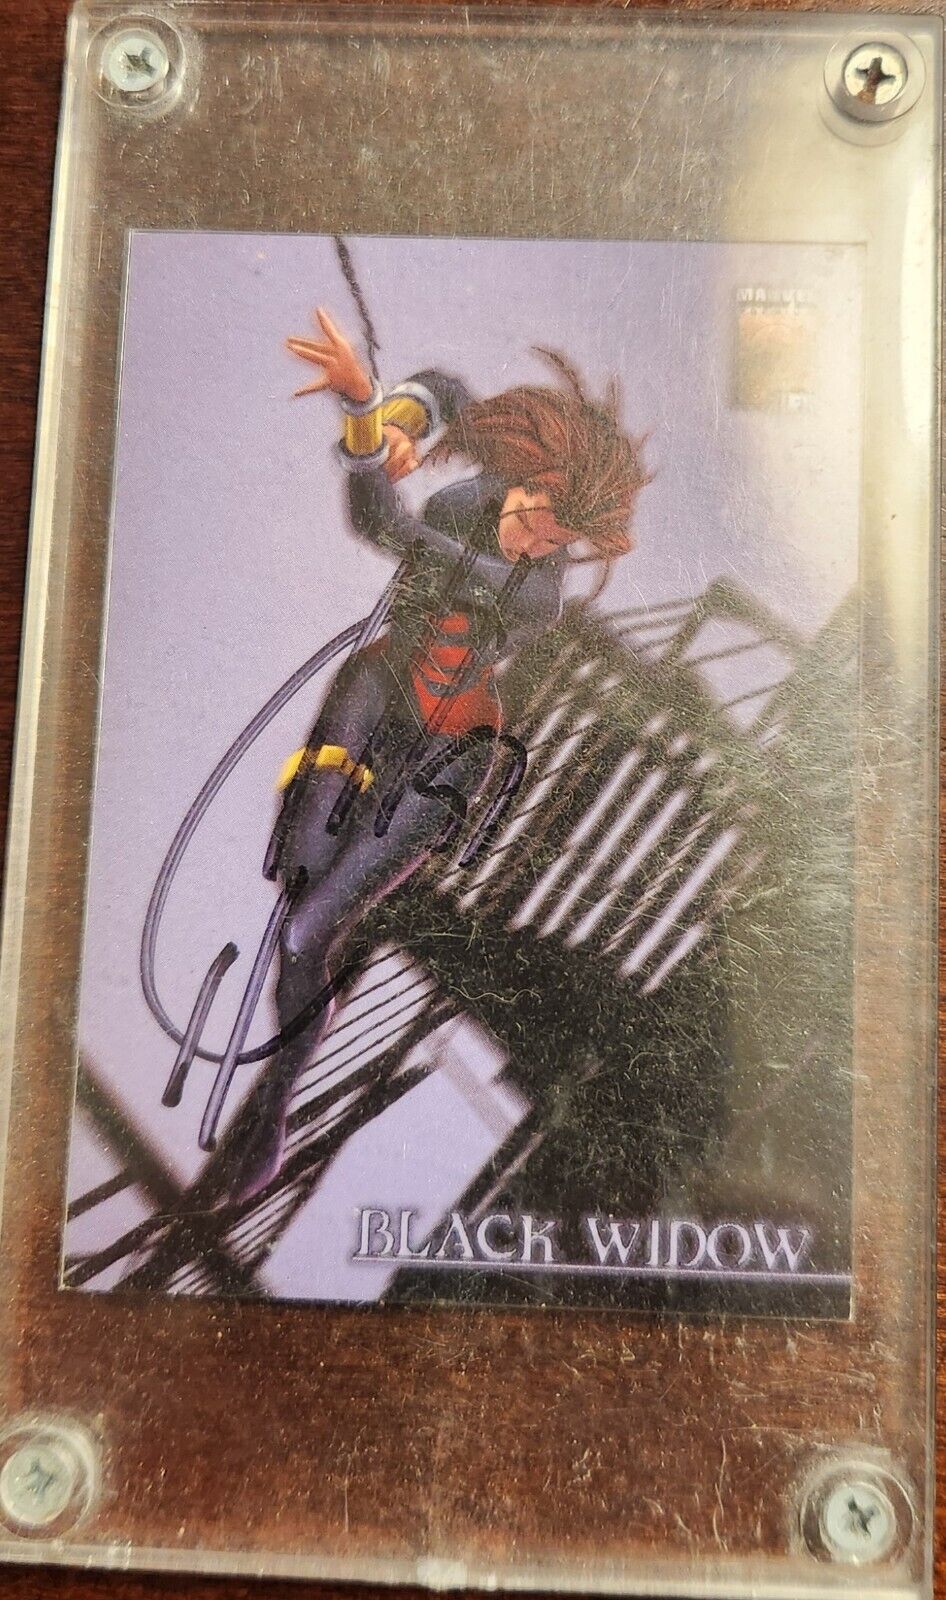 1997 Fleer/Skybox Marvel Black Widow Autographed By Joe Quesada